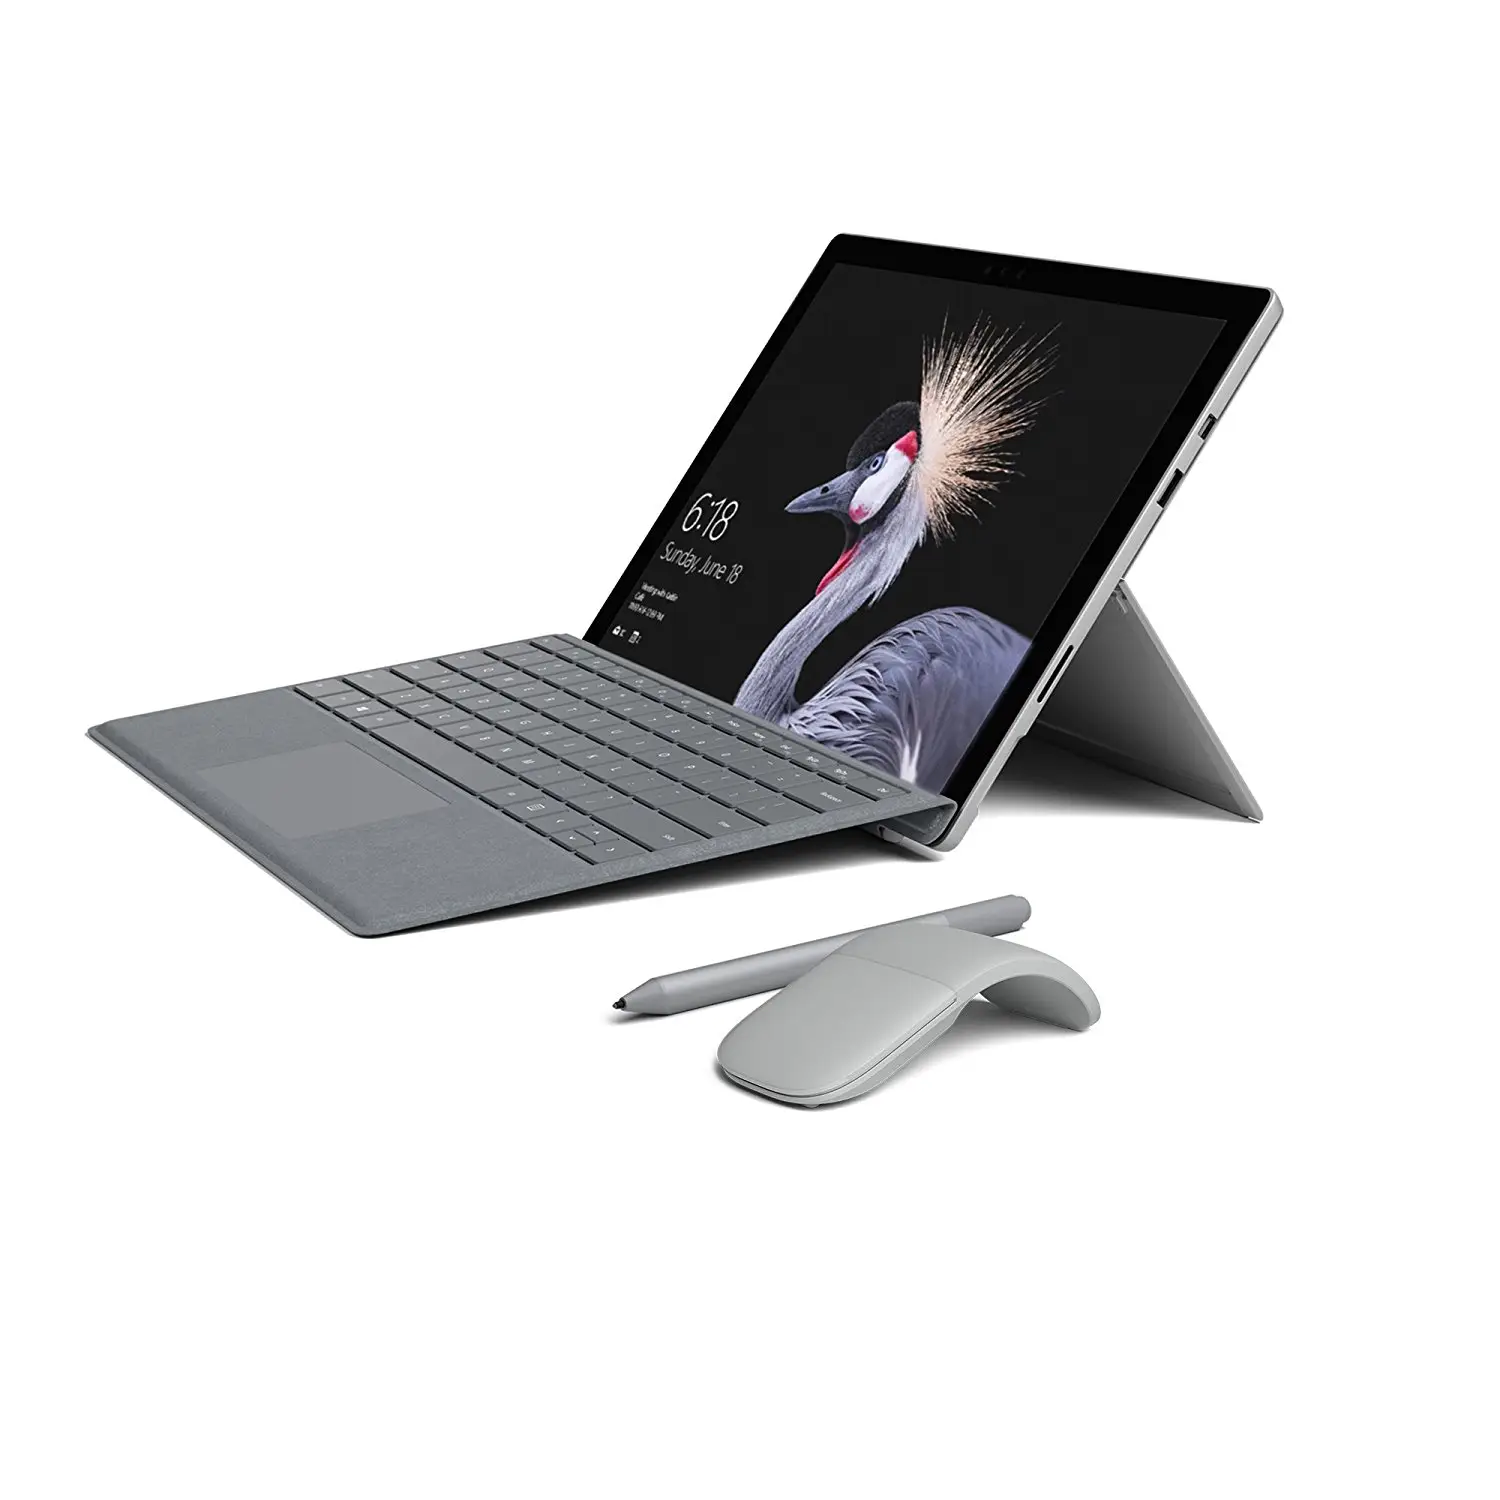 Pack Exclusif: Microsoft Surface Pro + Type Cover Alcantara + Souris Arc + Stylet, Pack couleur Platine, Tablette pas cher Amazon